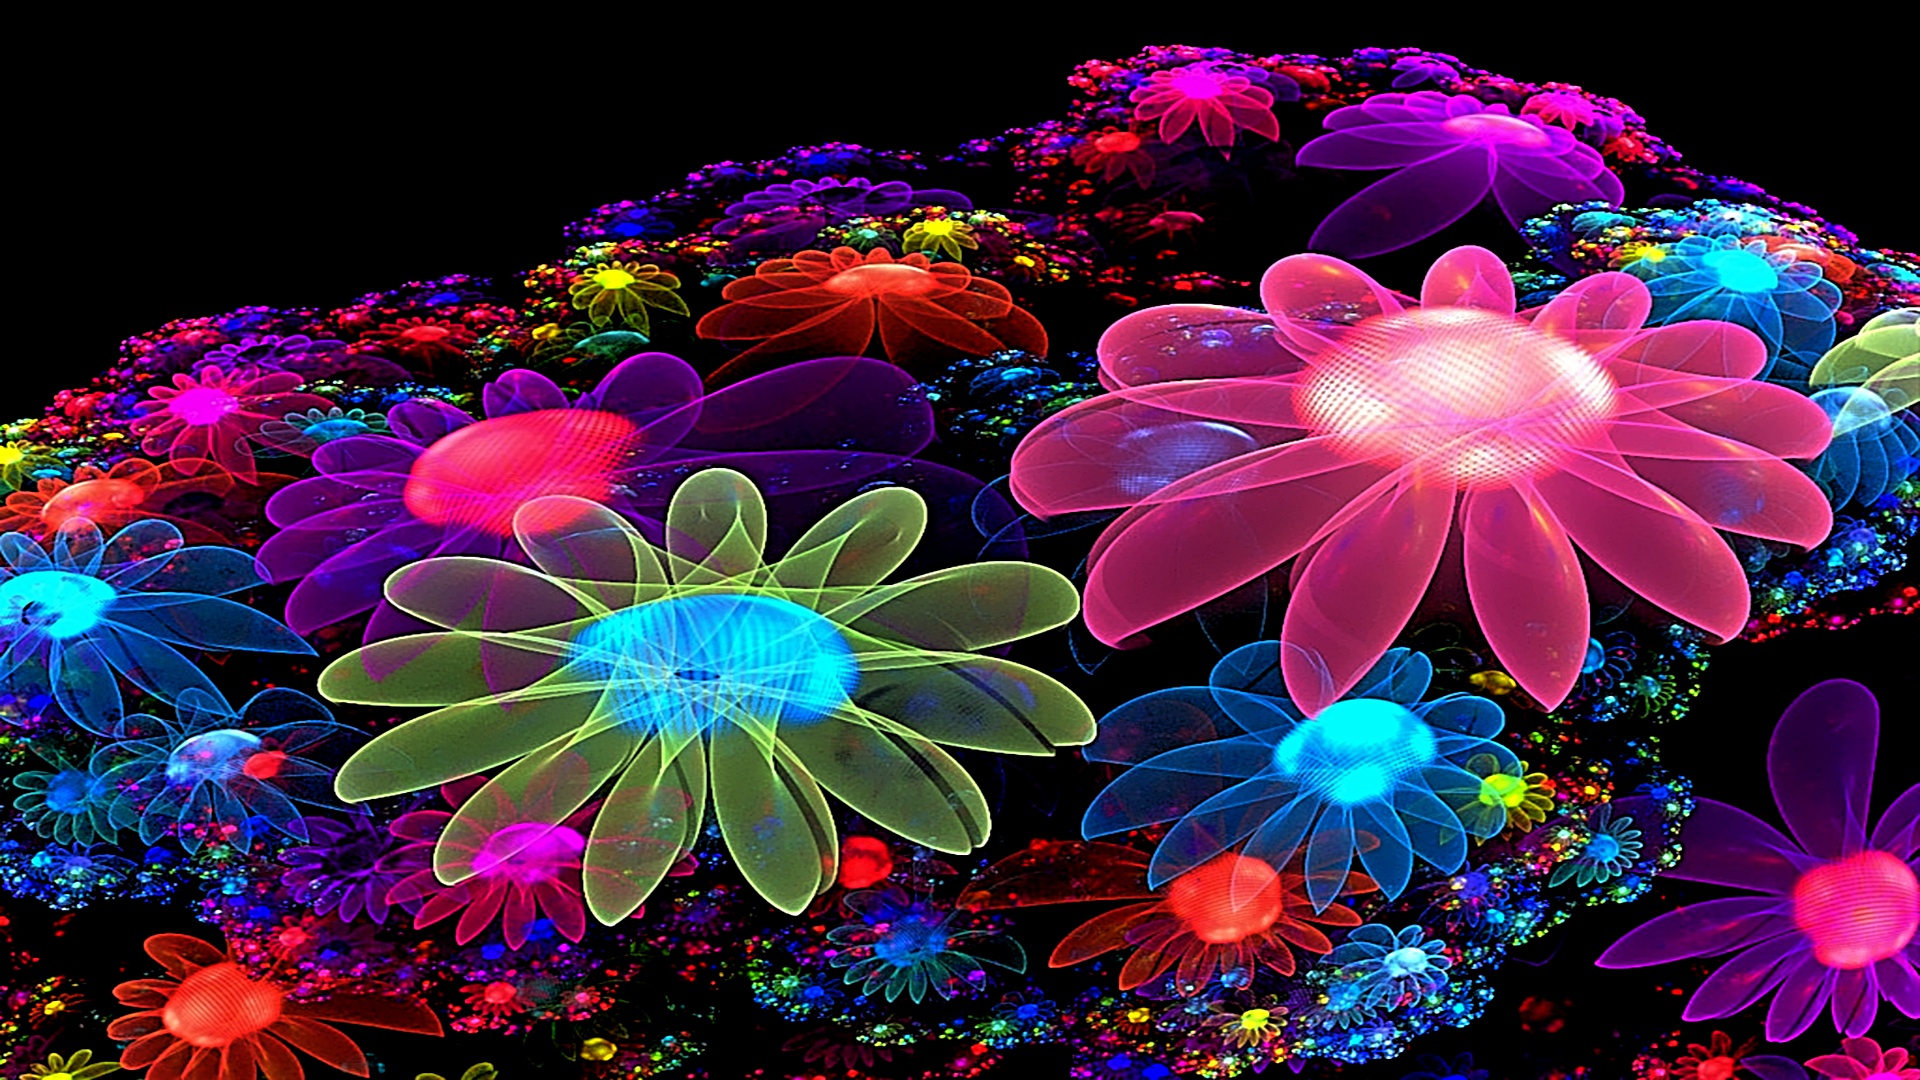 Colorful Flowers Desktop Wallpaper Image Fullsize